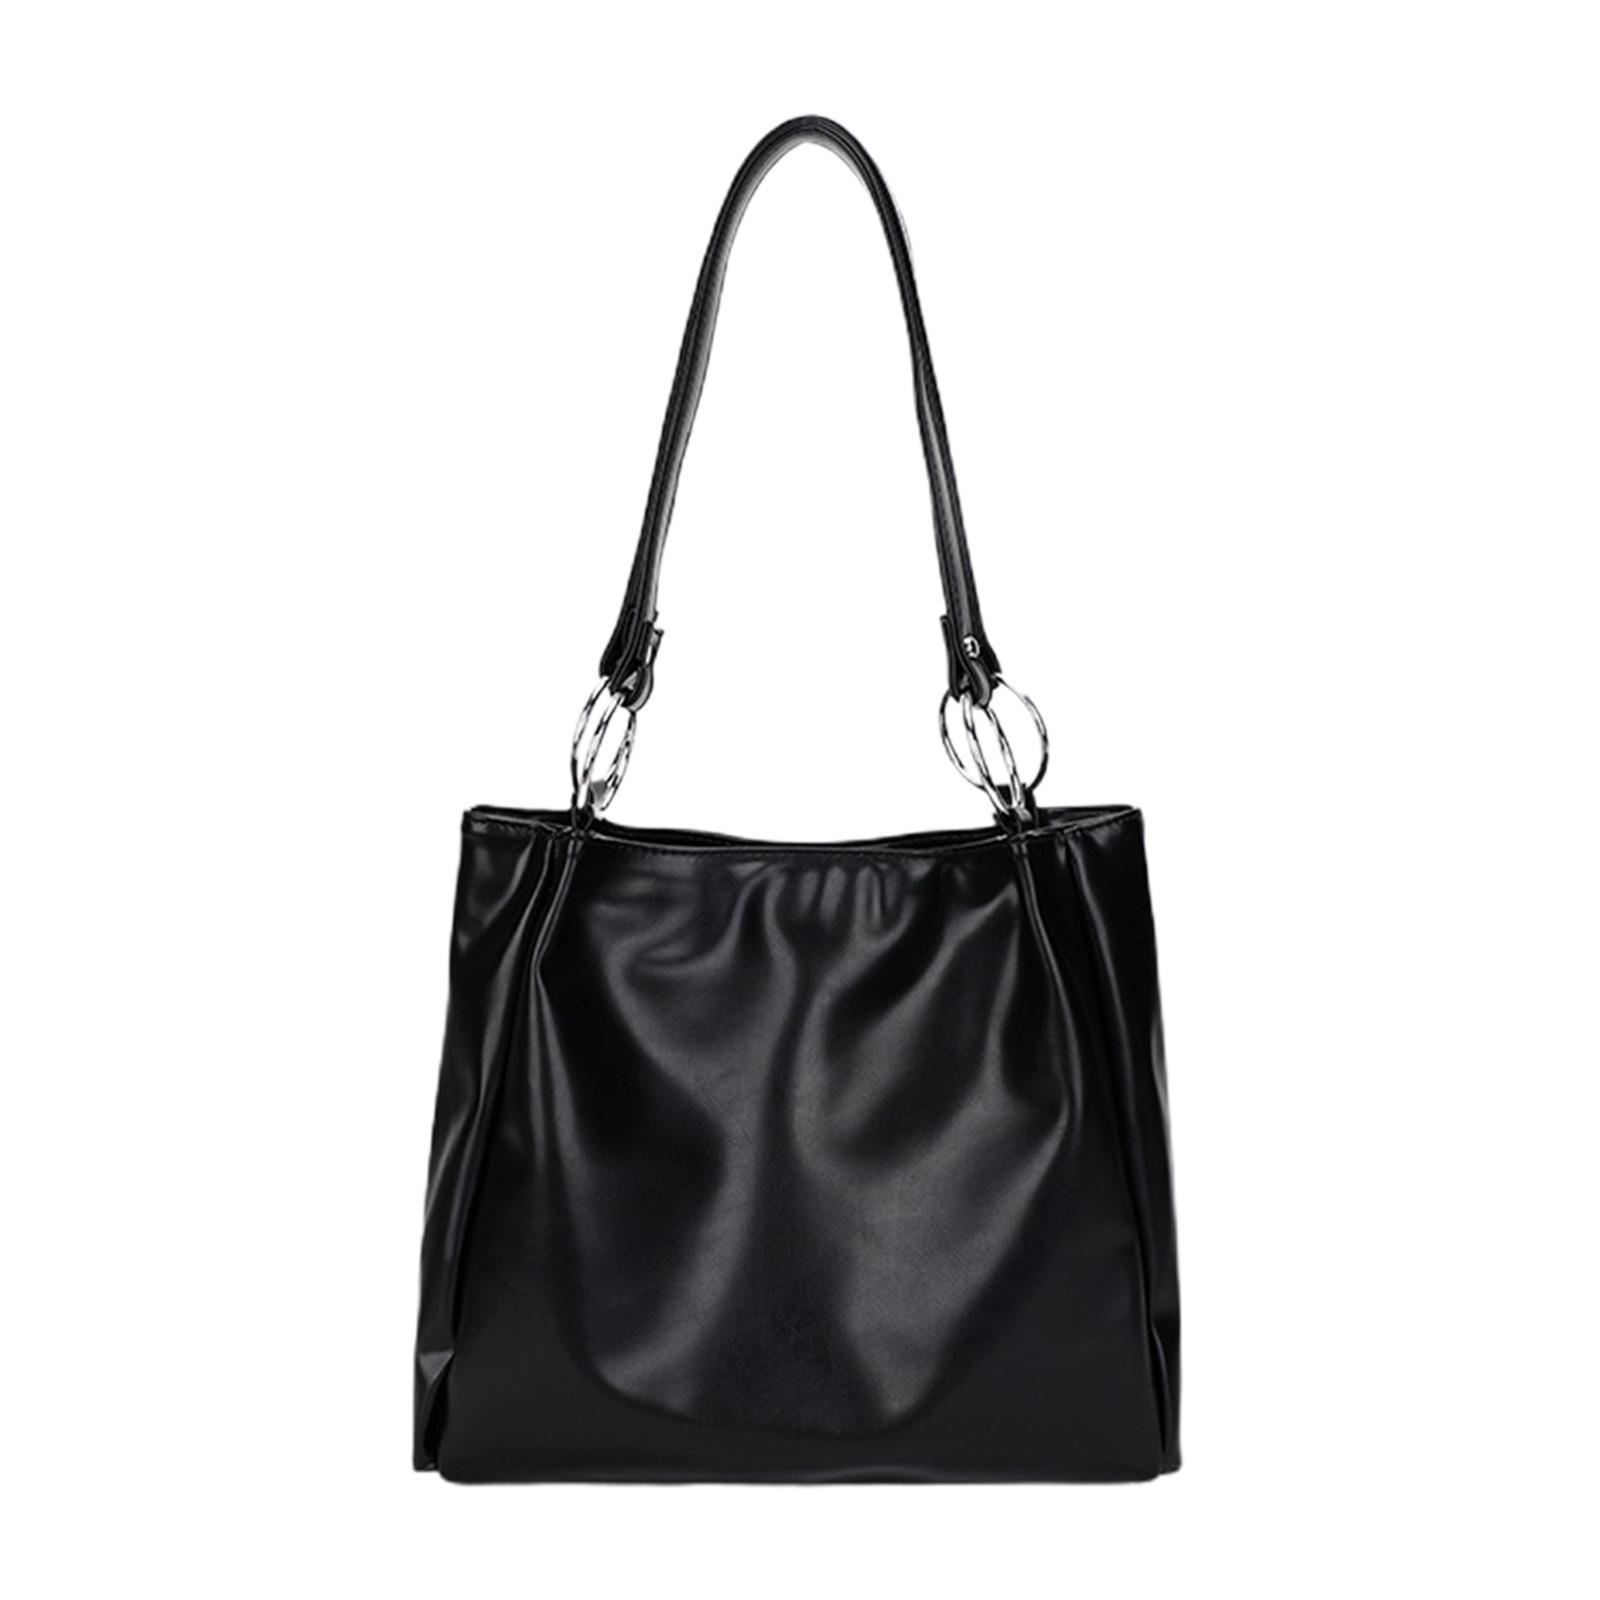 Fashion Women Shoulder Bag Handbag Purse Gift Soft Casual Shopping